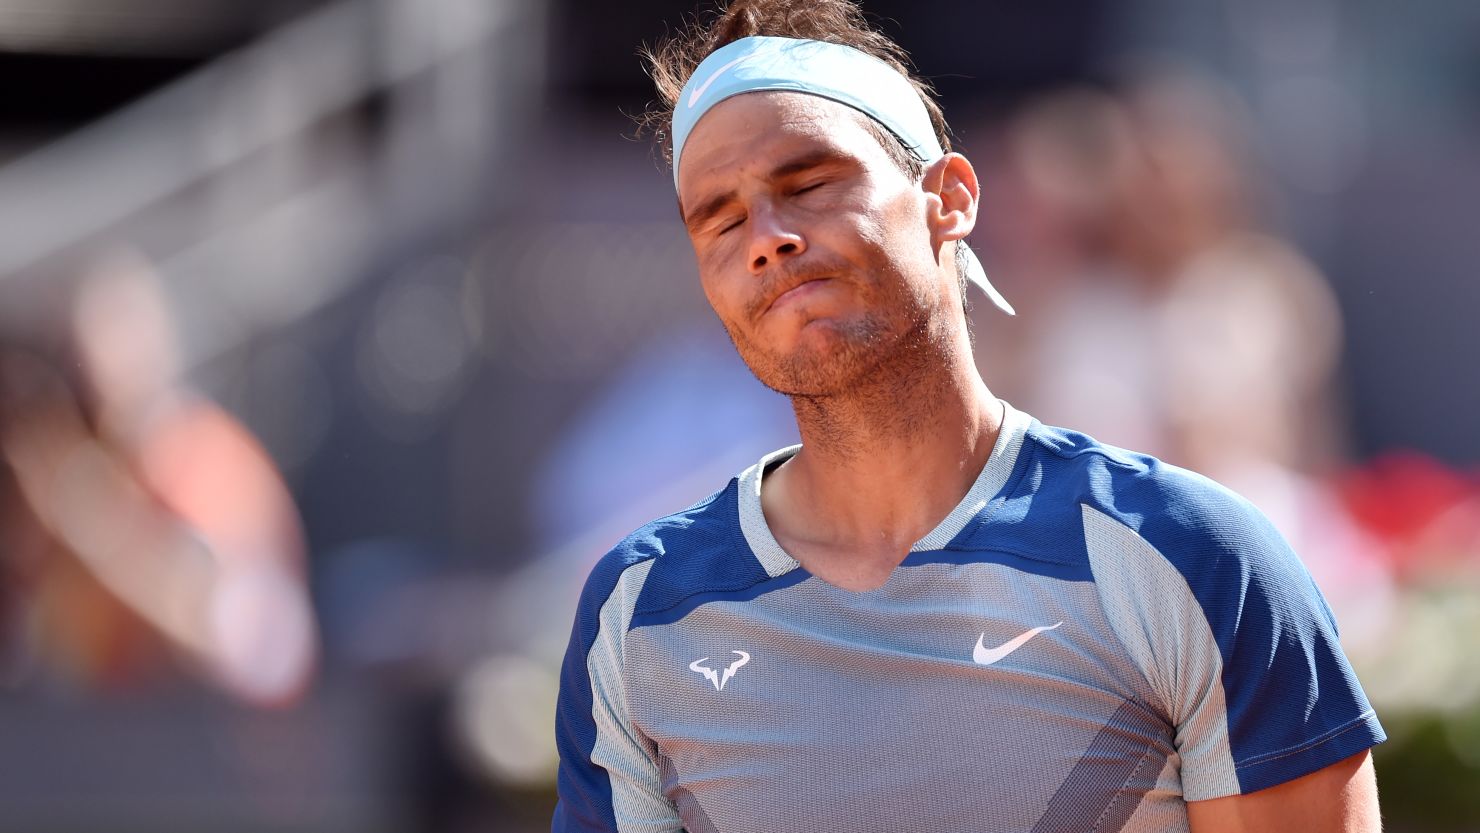 Rafael Nadal said he suffers pain "every single day."